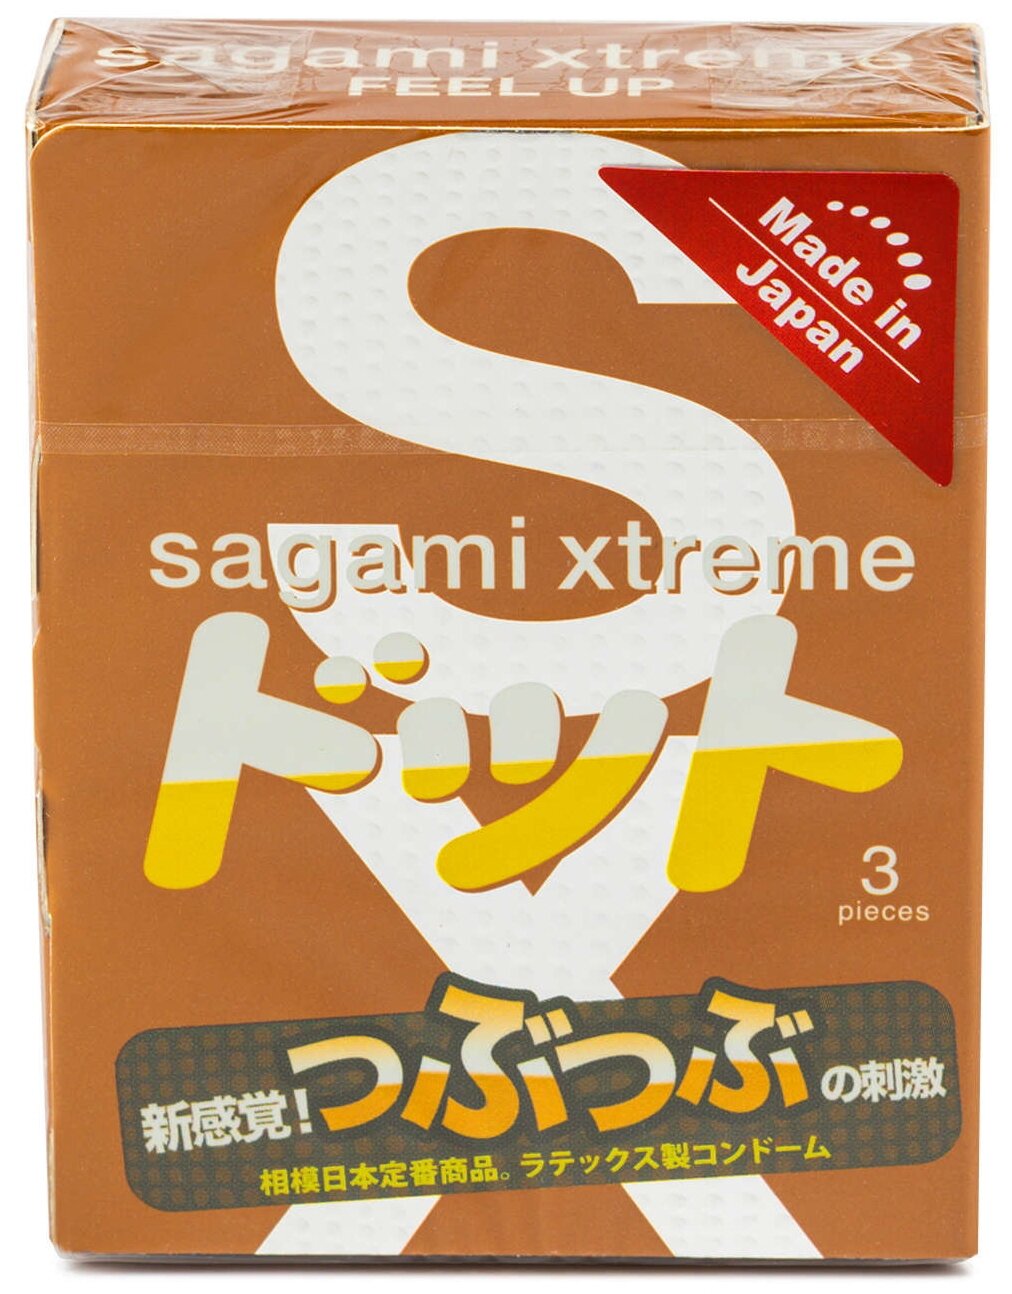 758 Sagami Xtreme Feel Up, 3 .   .   3 .